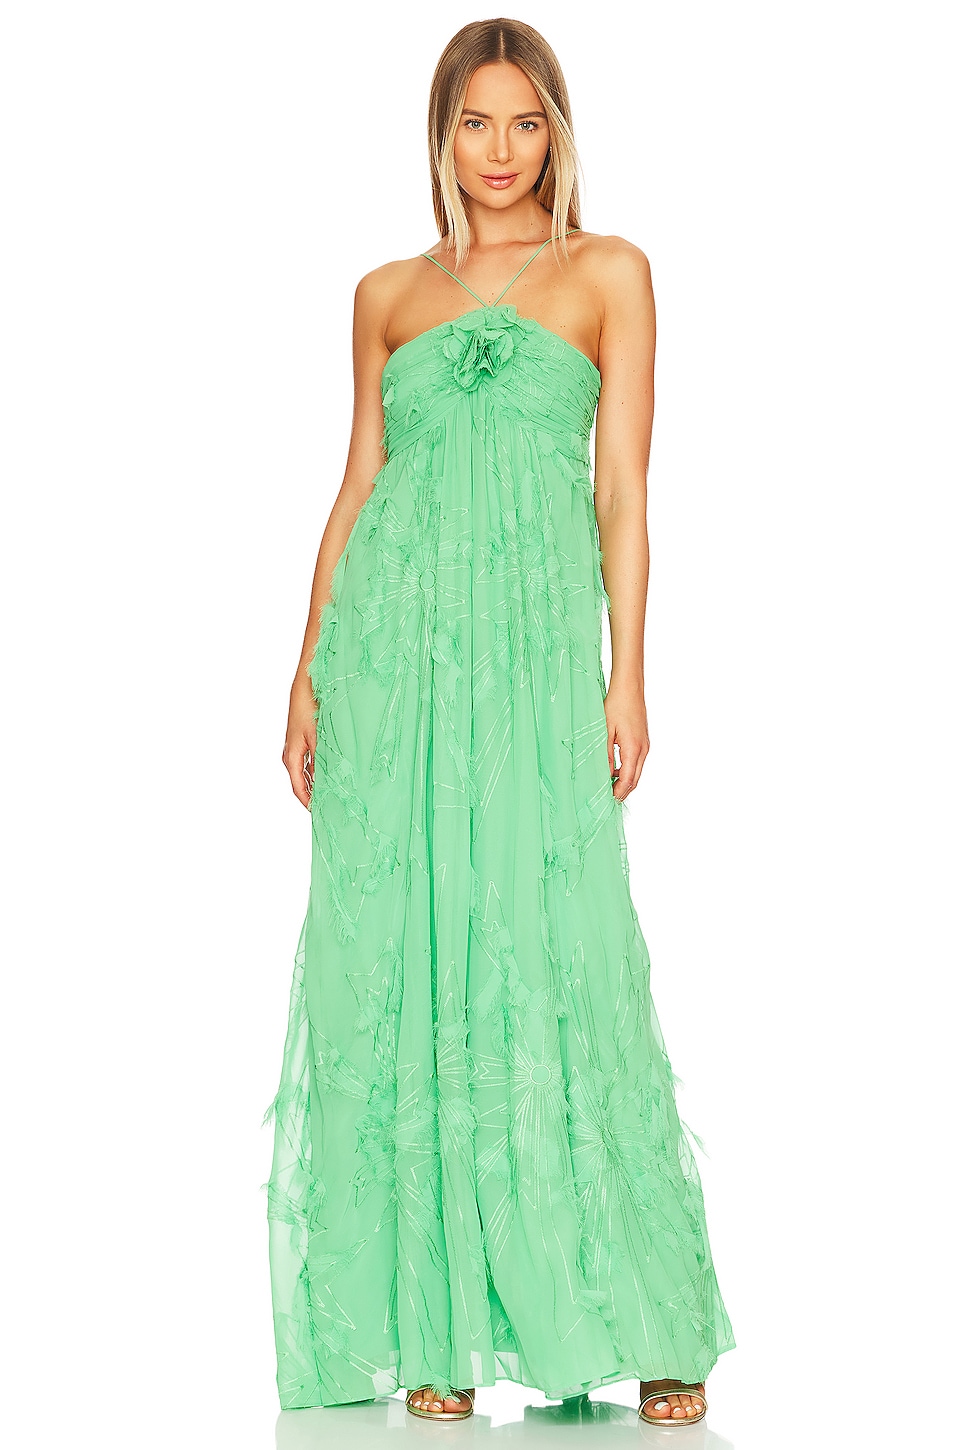 Alexis Sole Dress in Emerald | REVOLVE